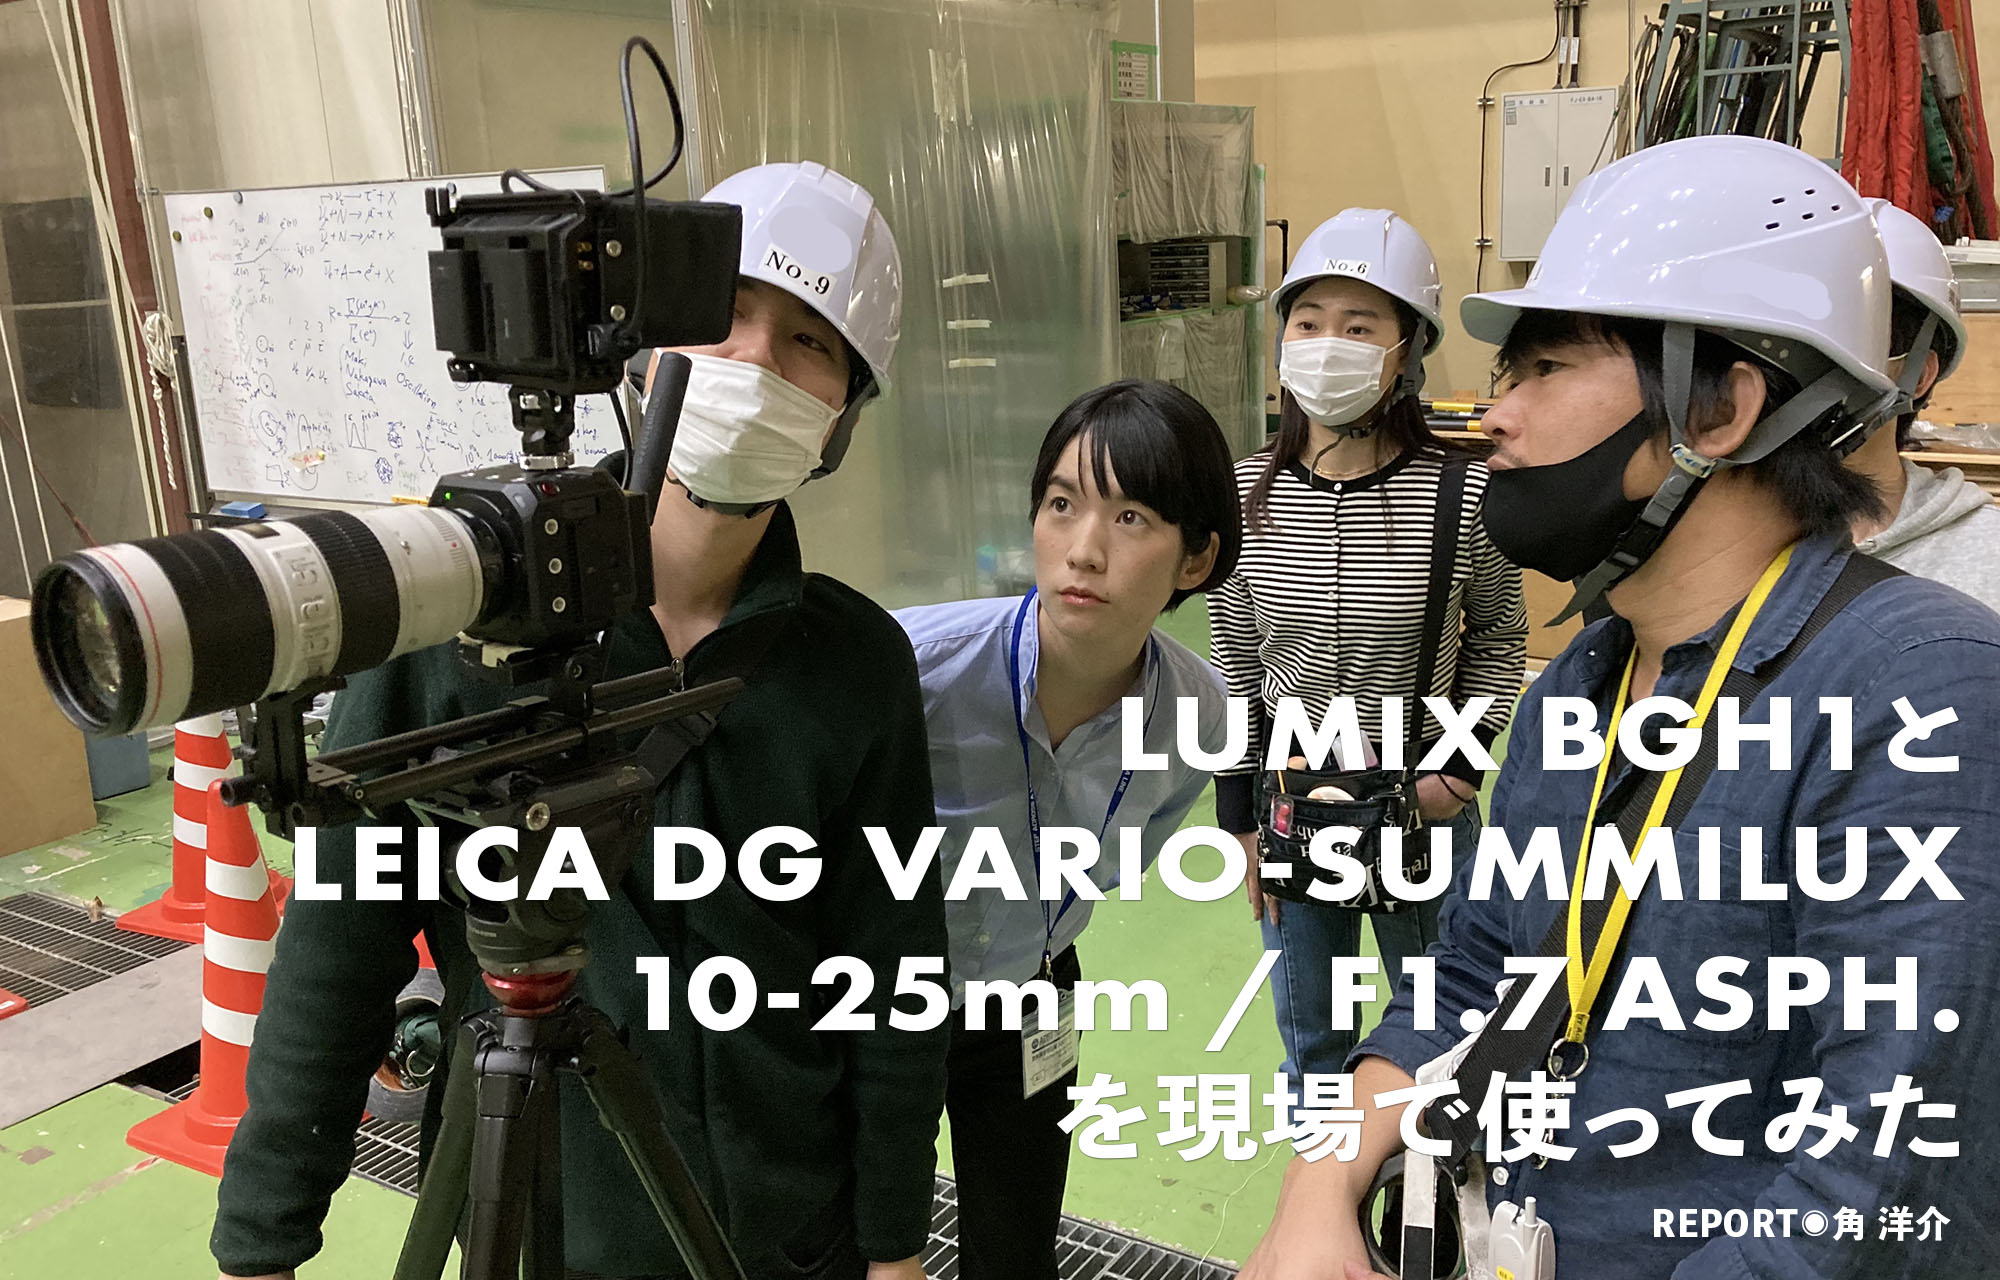 LUMIX BGH1とMFT大口径ズームLEICA DG VARIO-SUMMILUX 10-25mm / F1.7